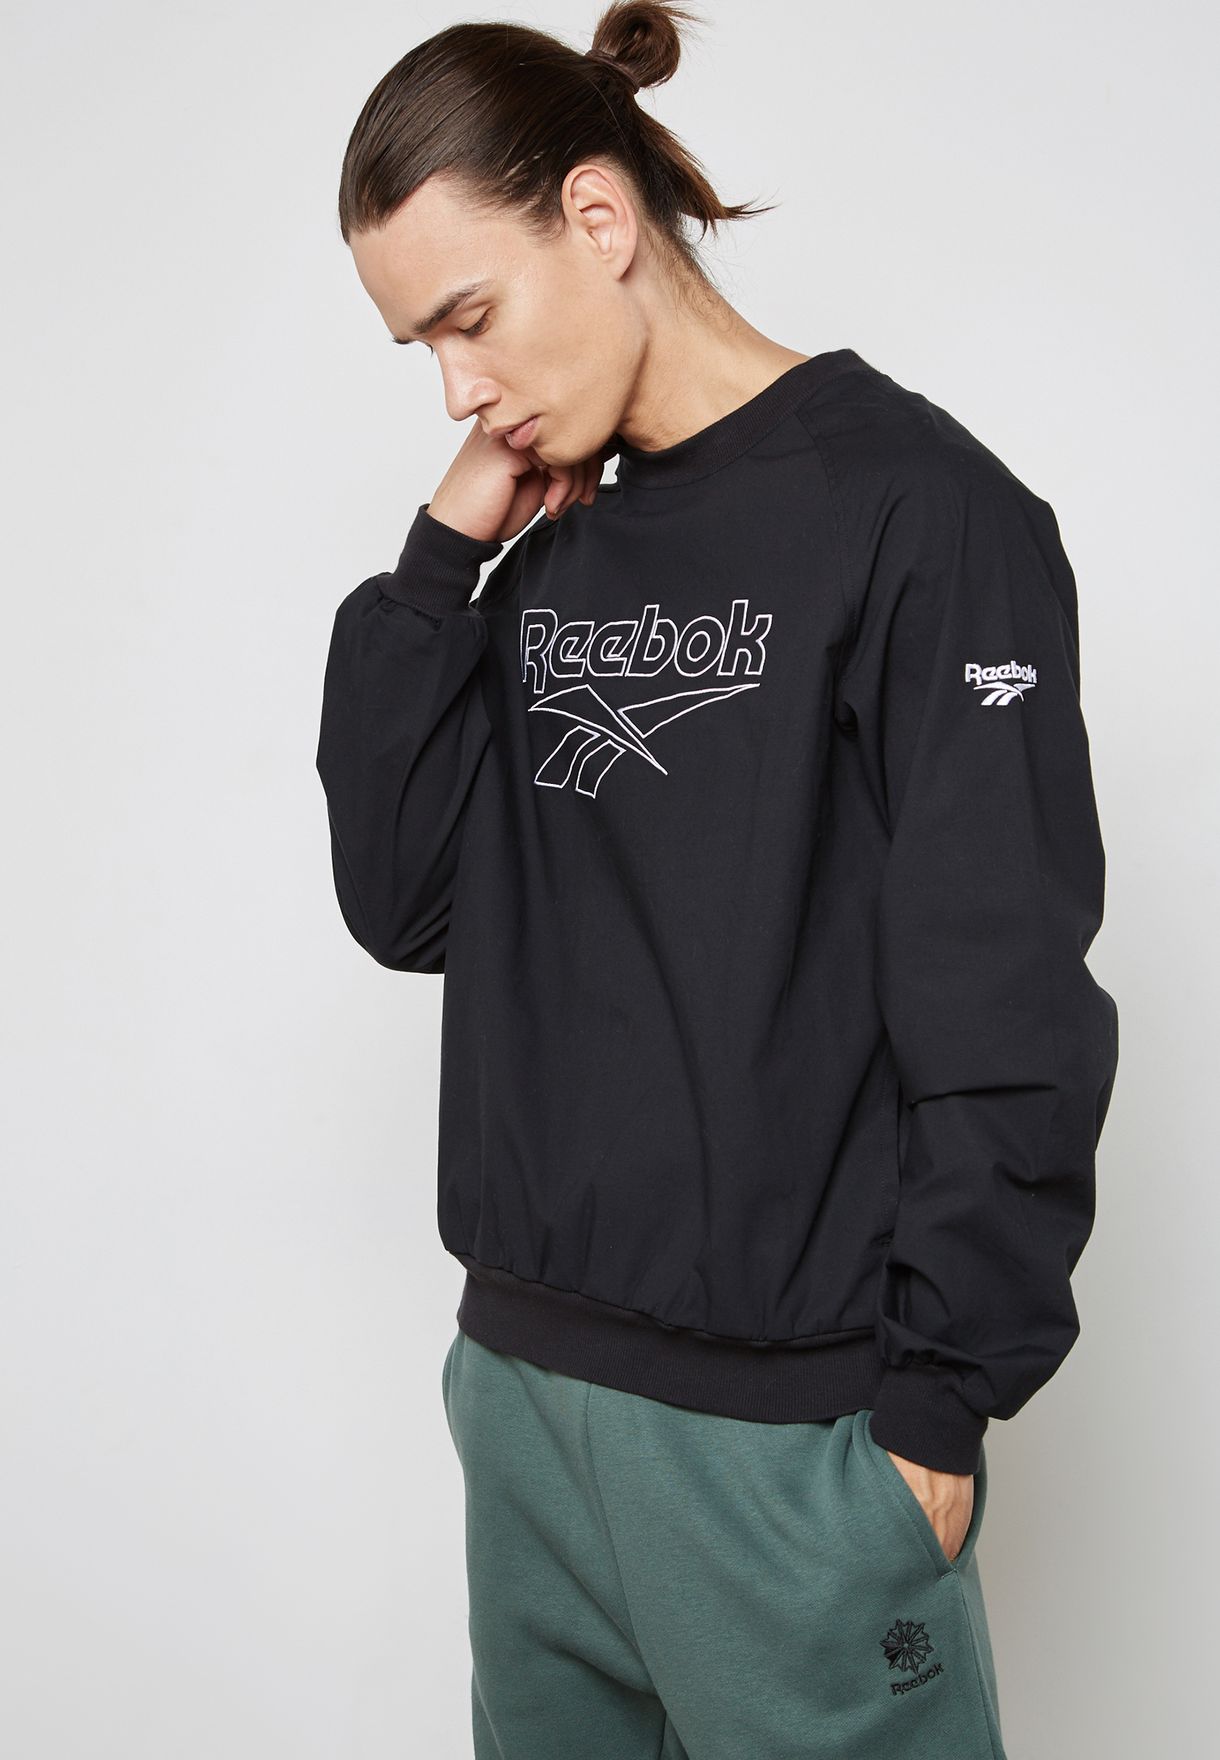 Buy Reebok black Logo Sweatshirt for 